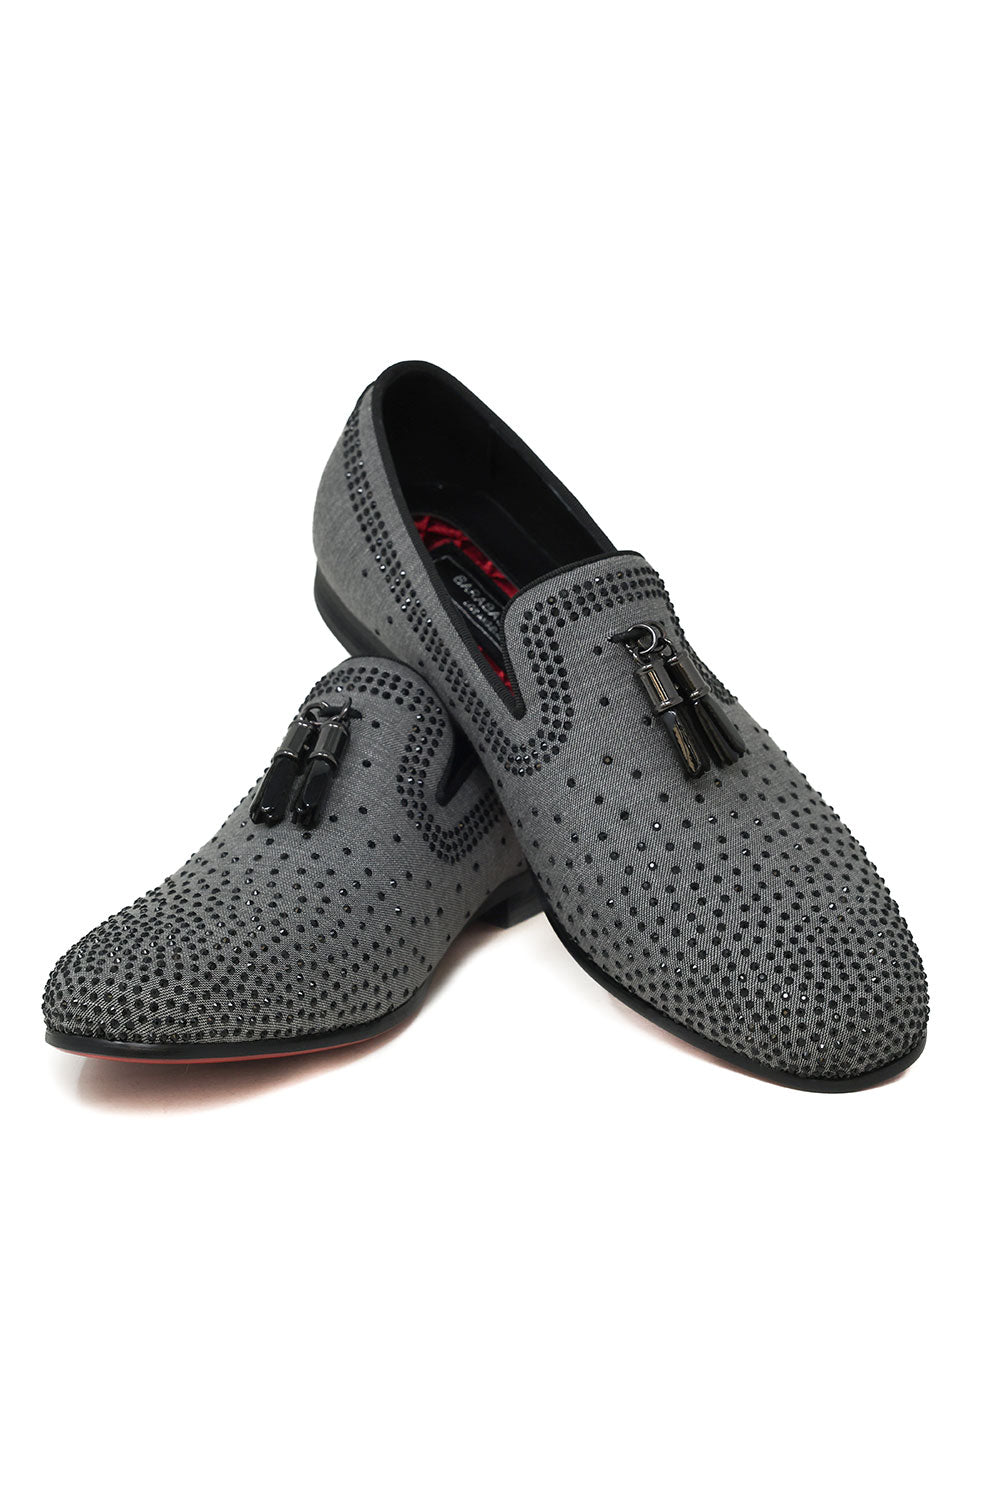 Barabas Men's Rhinestone Slip On Tassel Loafer Dress Shoes 2ESH3 Grey